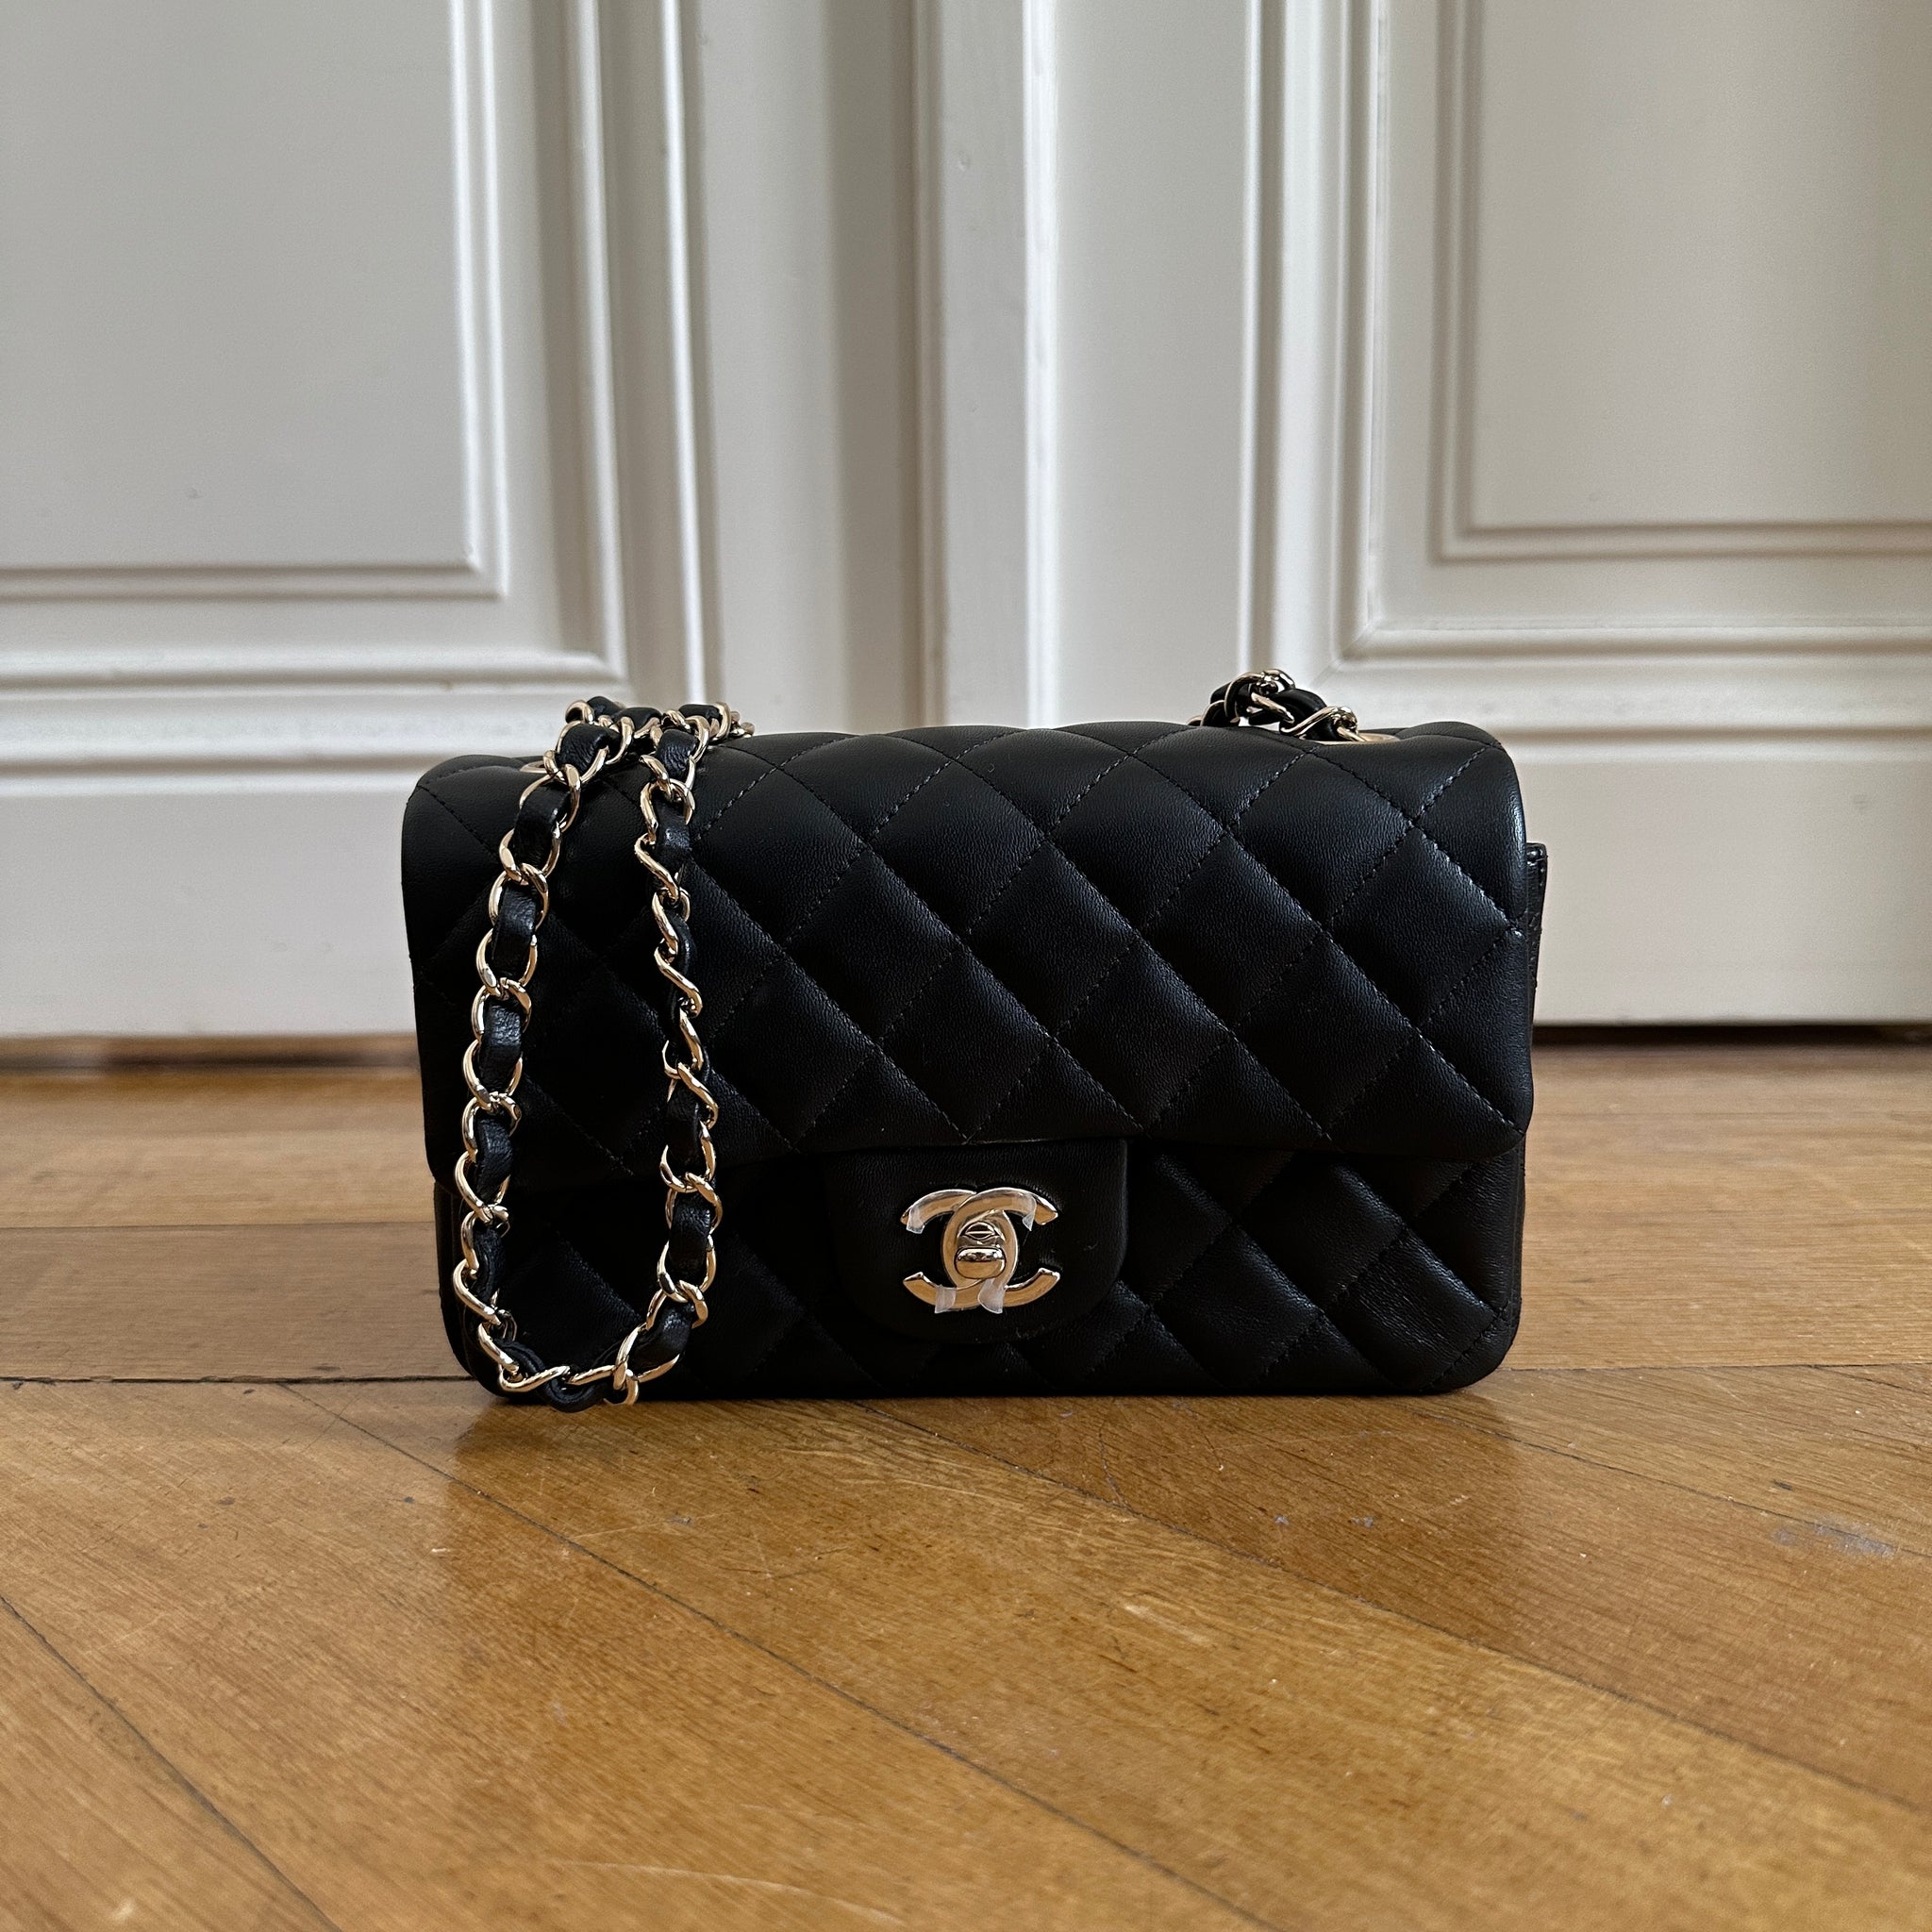 Shop Women's Chanel Bags